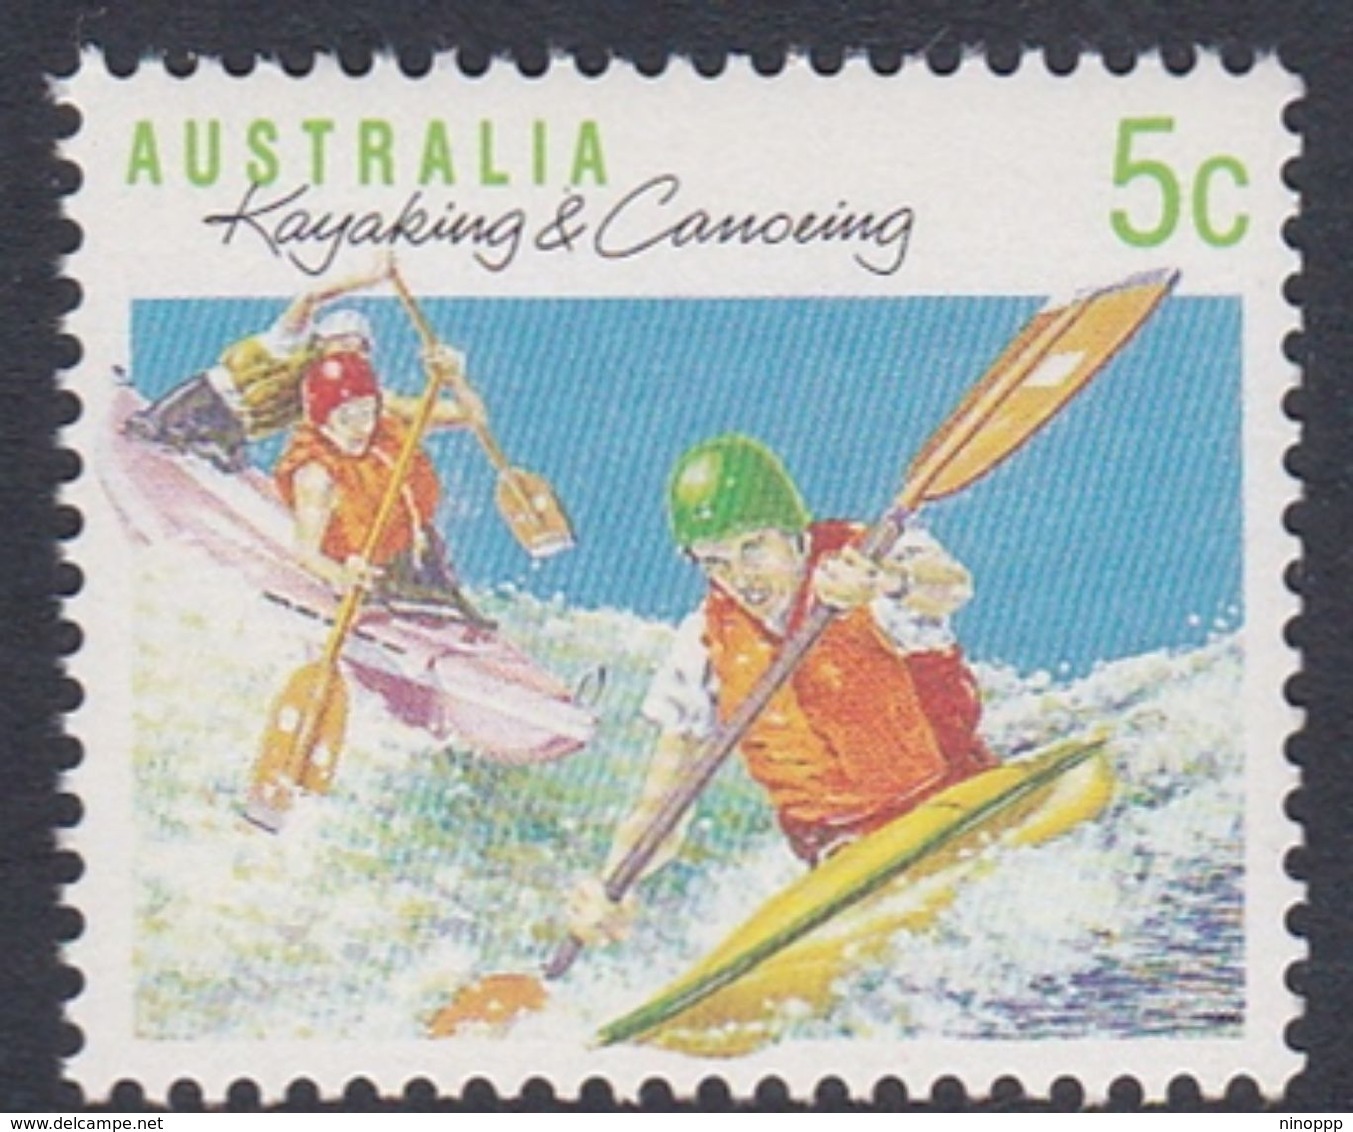 Australia ASC 1227b 1990 Sports 5c Kayaking Perf 14 X 14.5, Mint Never Hinged - Essais & Réimpressions